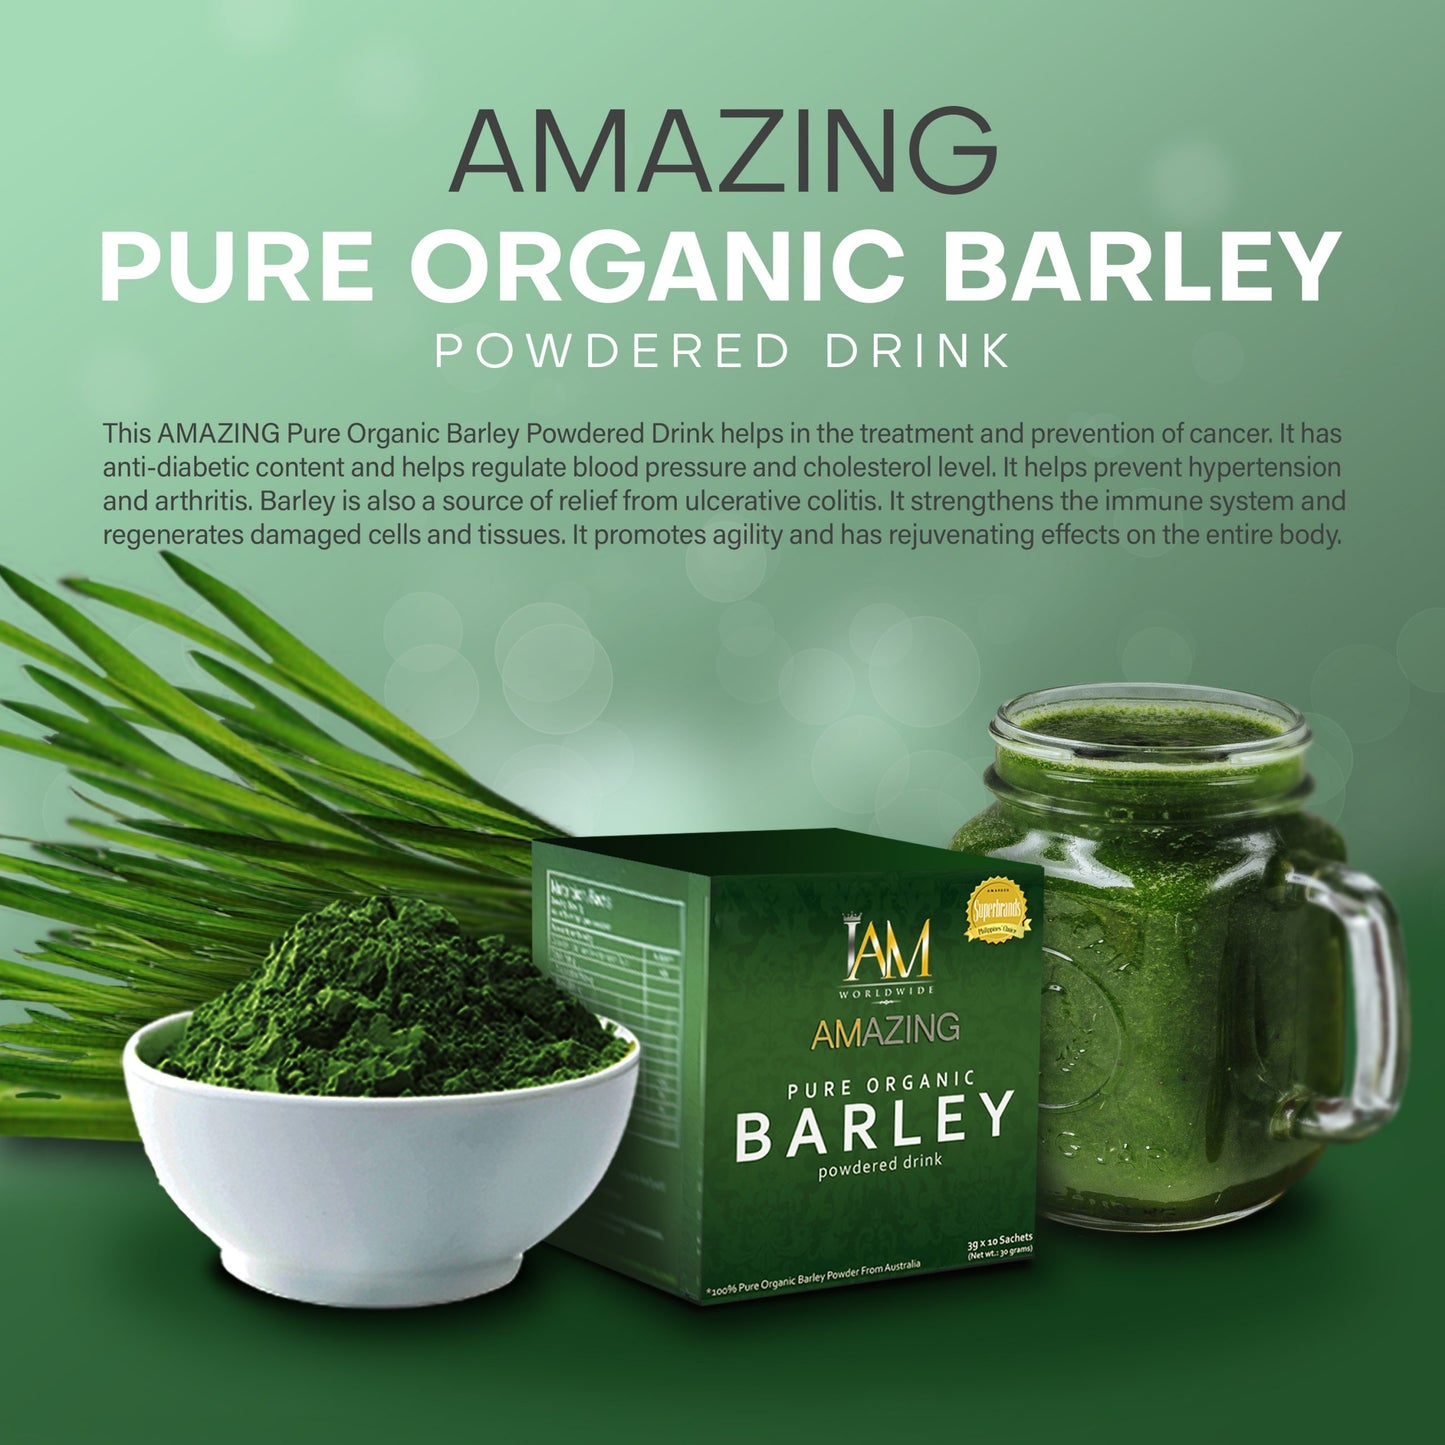 IAM Amazing Pure Organic Barley Powdered Drink Mix